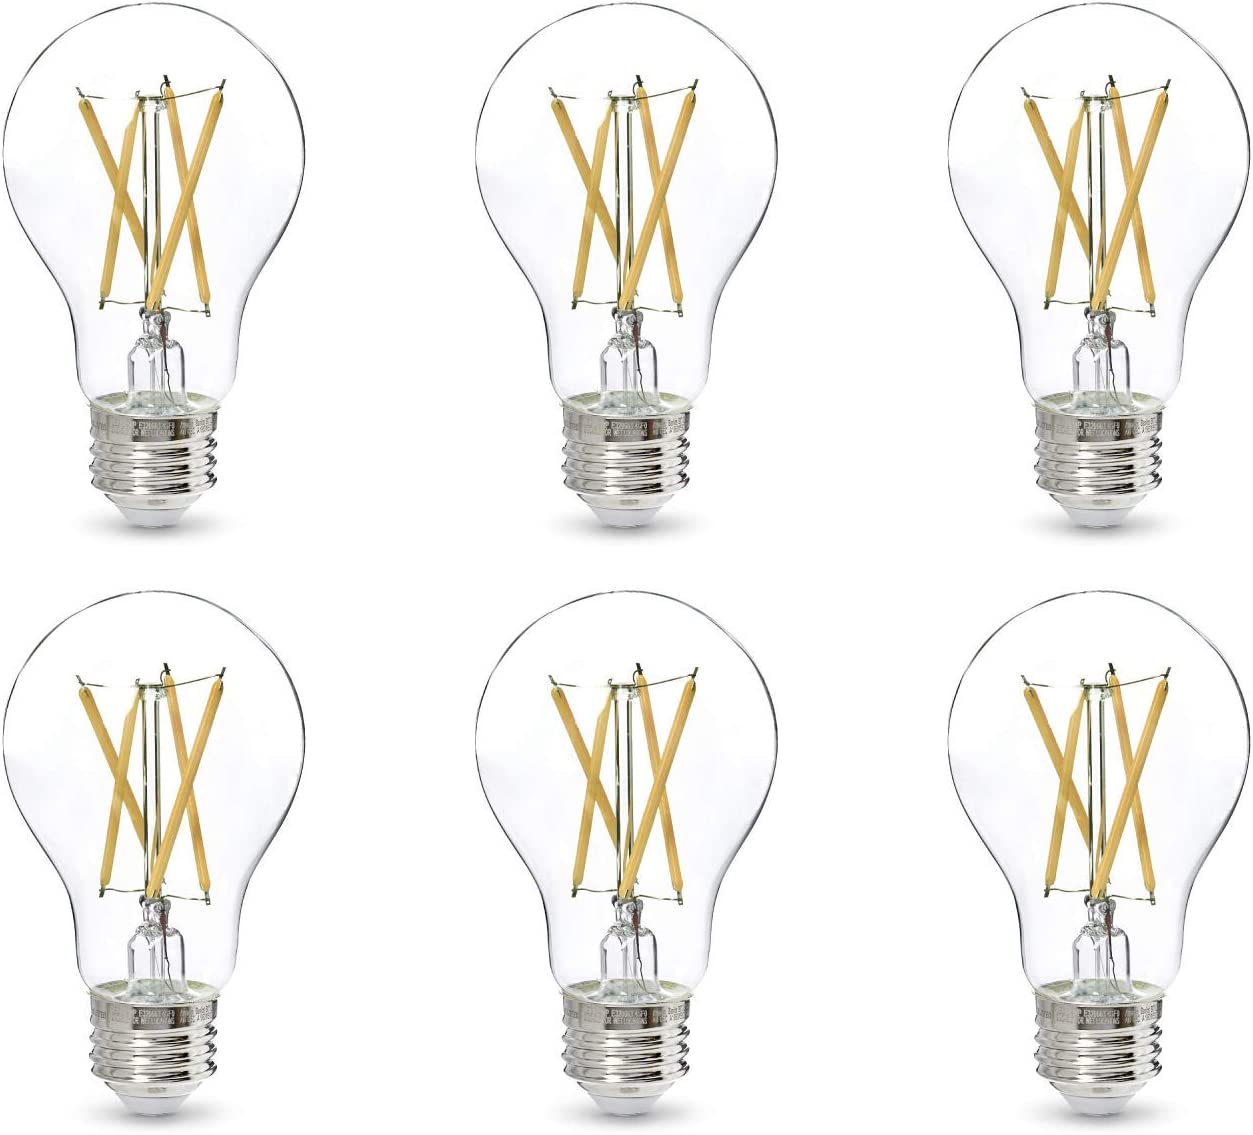 Amazon Basics 60W Equivalent, Soft White, Dimmable, 10,000 Hour Lifetime, A19 LED Light Bulb | 6-Pack